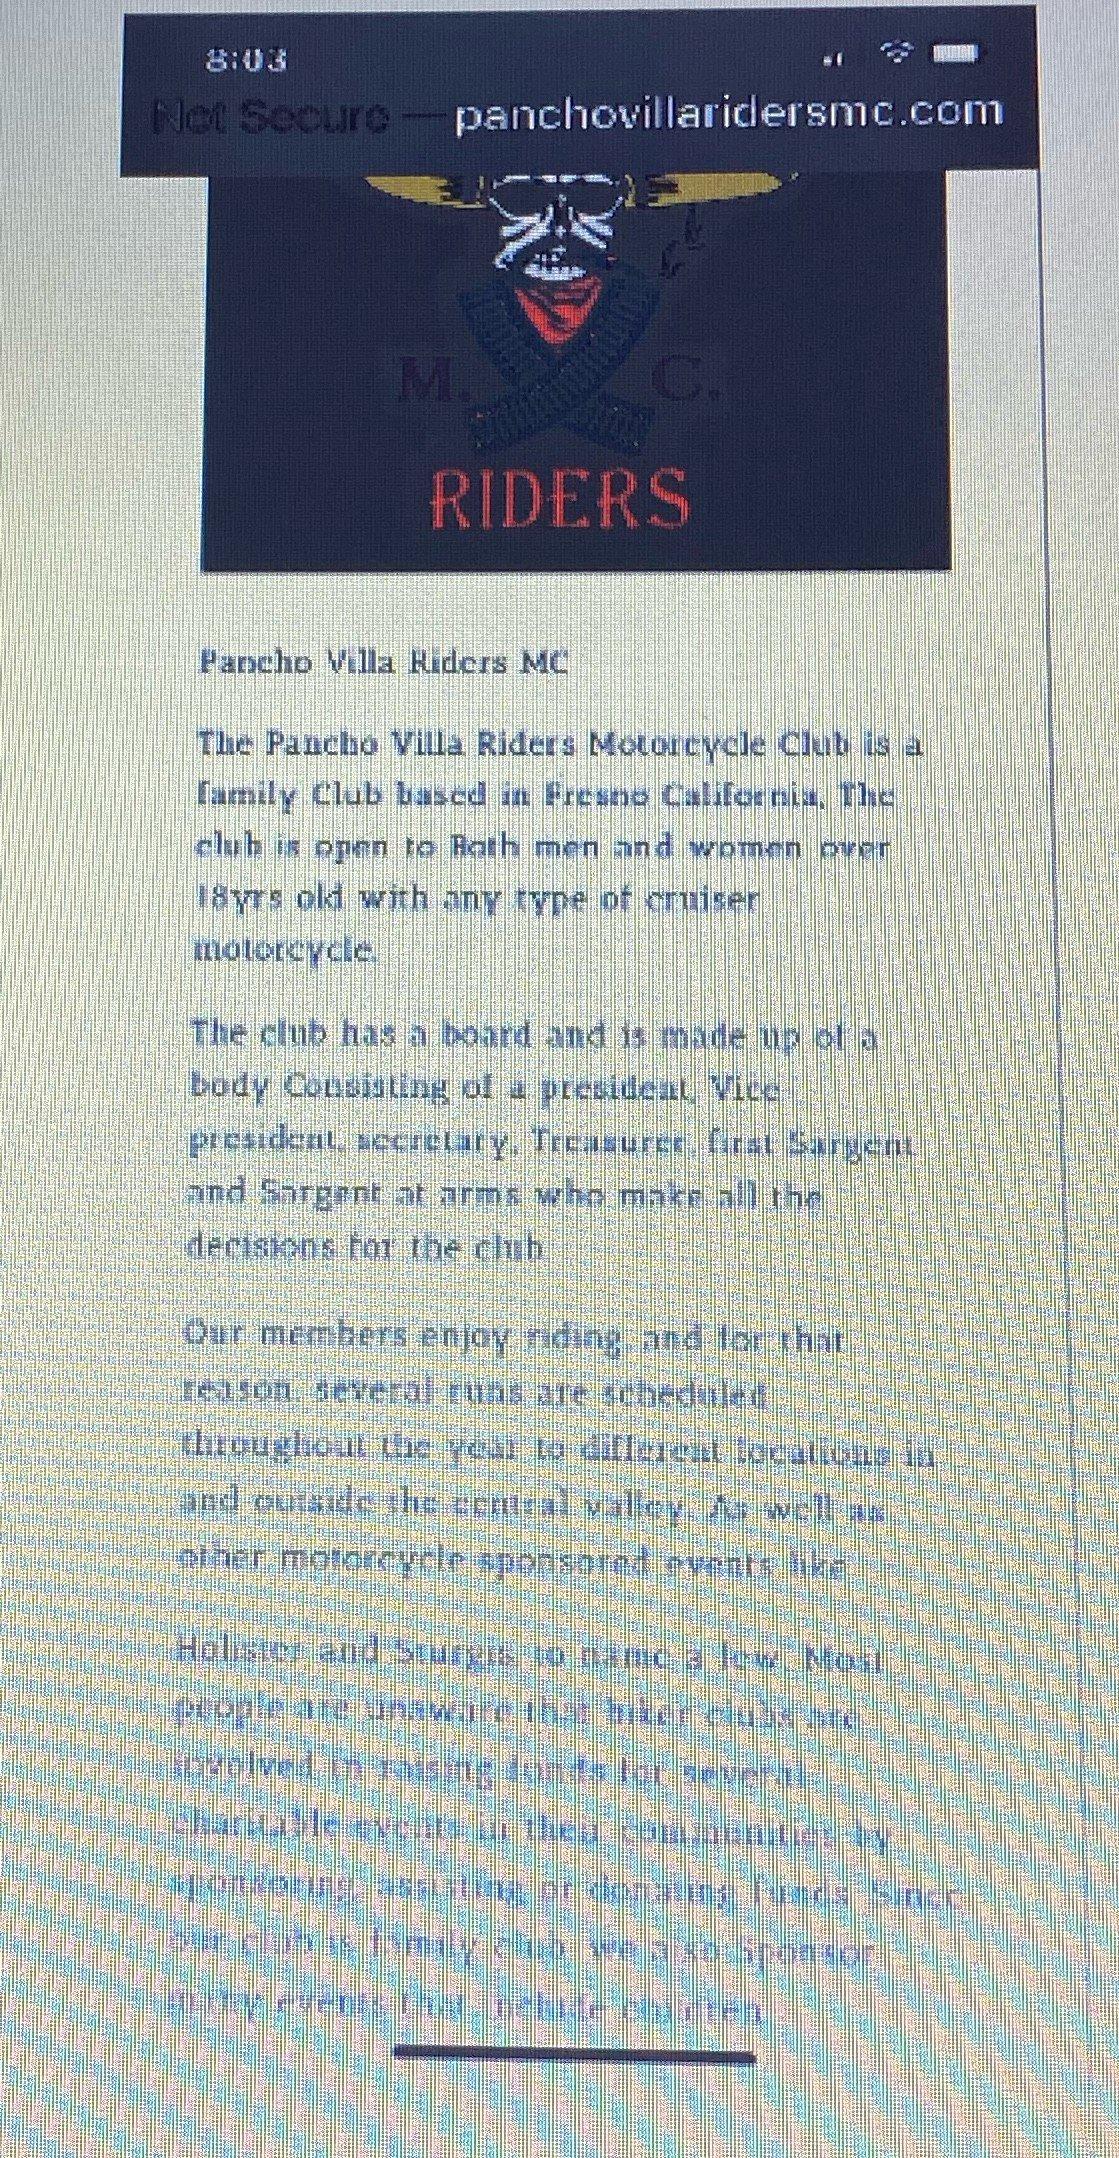 Specimen for Pancho Villa Riders 